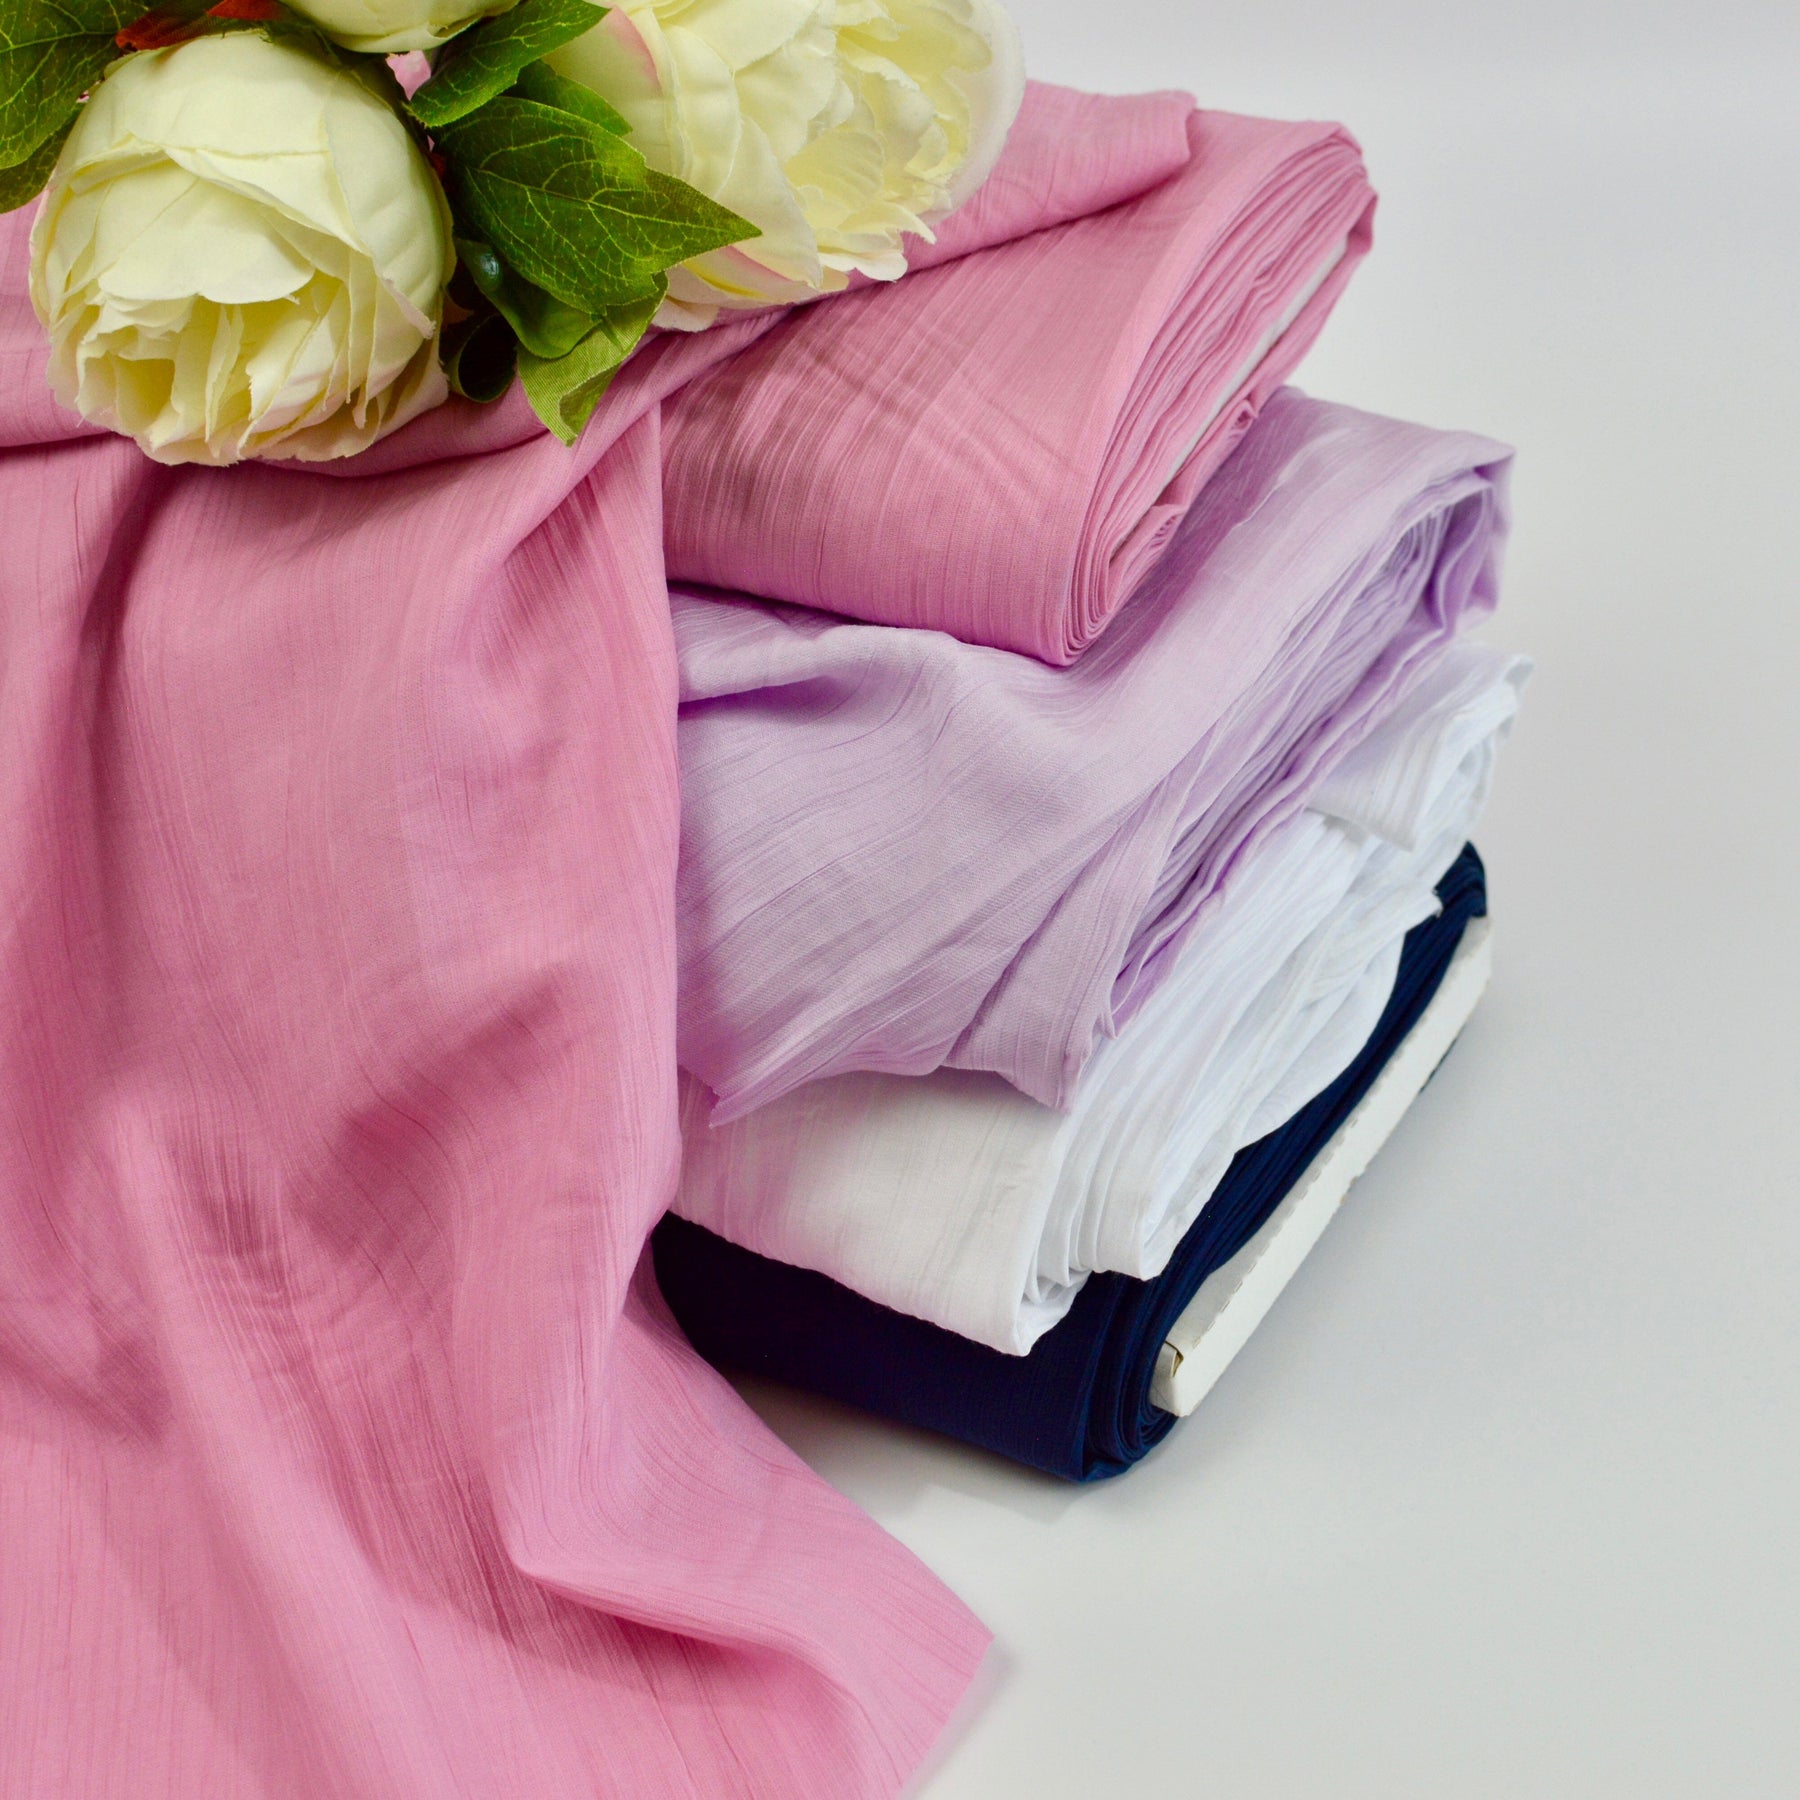 Viskose - gecrashed Glamlook rosa Fabric poshpinks